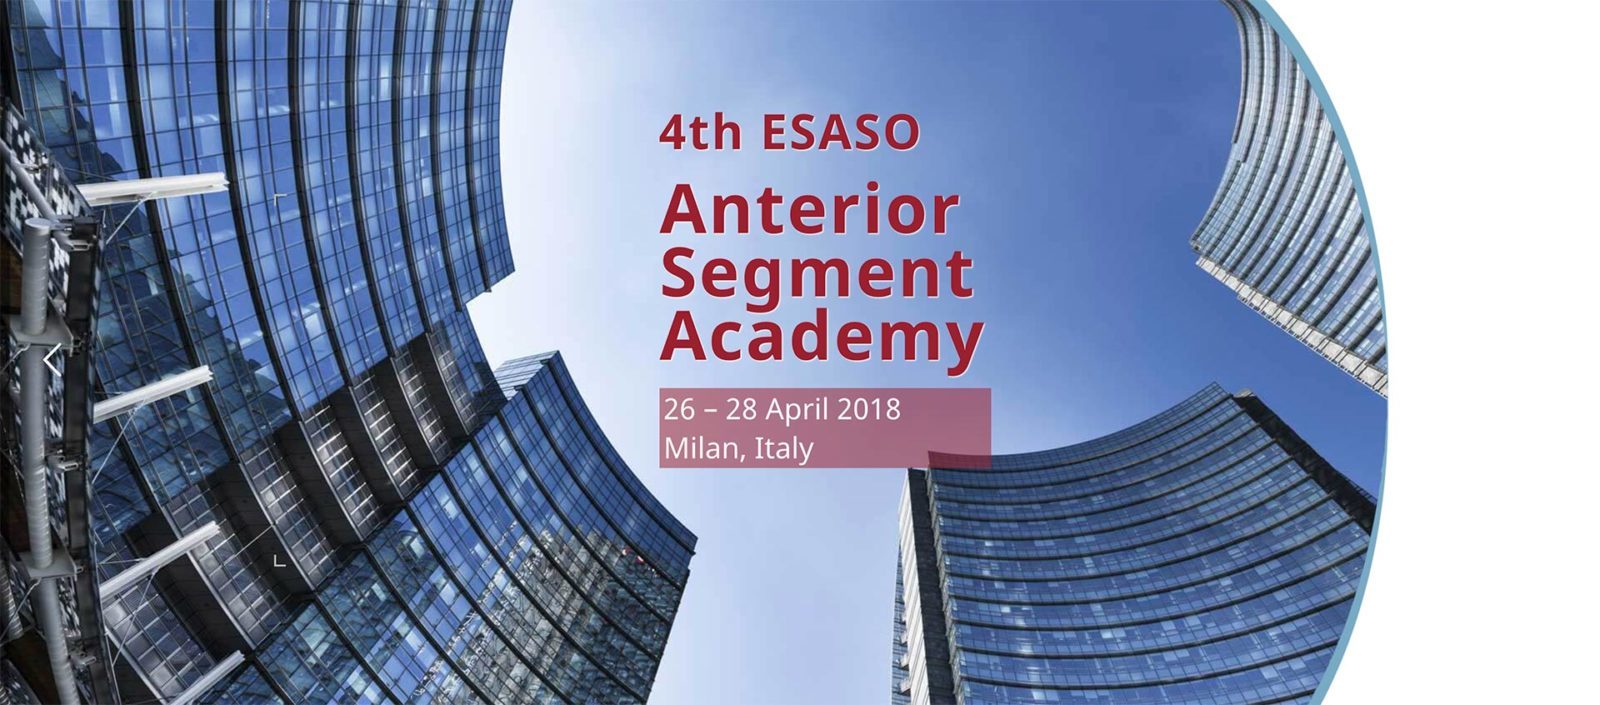 esaso-school-ophthalmology-lugano-Guell-for-Anterior-segment-academy